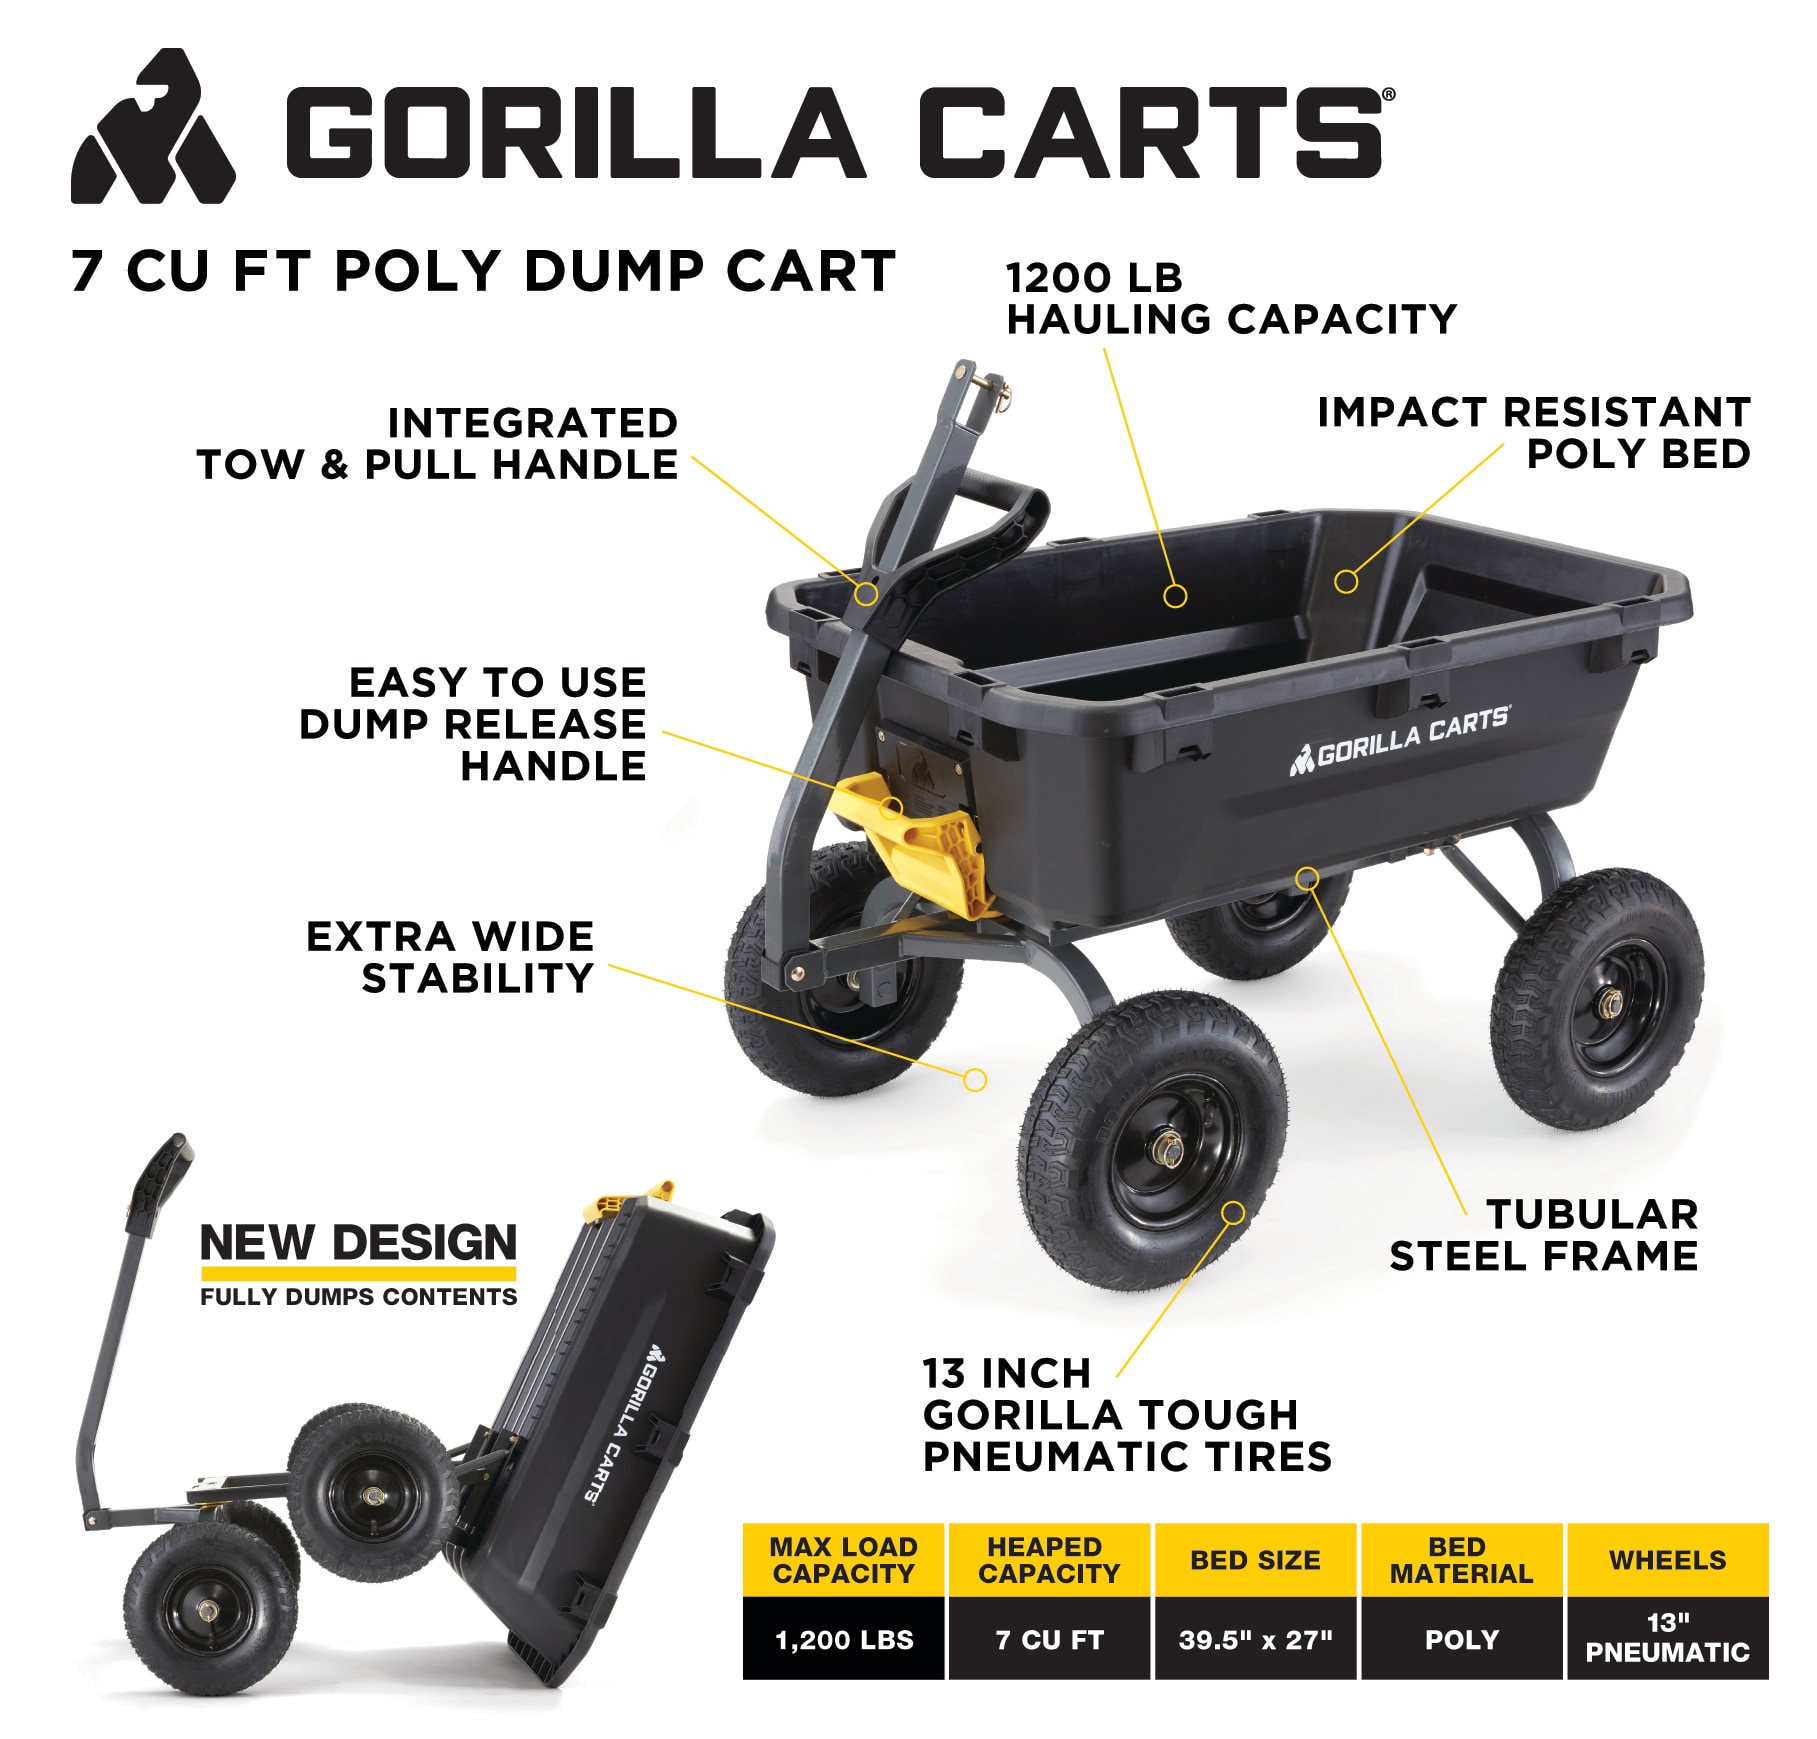 Murdoch's – Gorilla Carts - 7 Cu Ft Heavy Duty Poly Yard Dump Cart